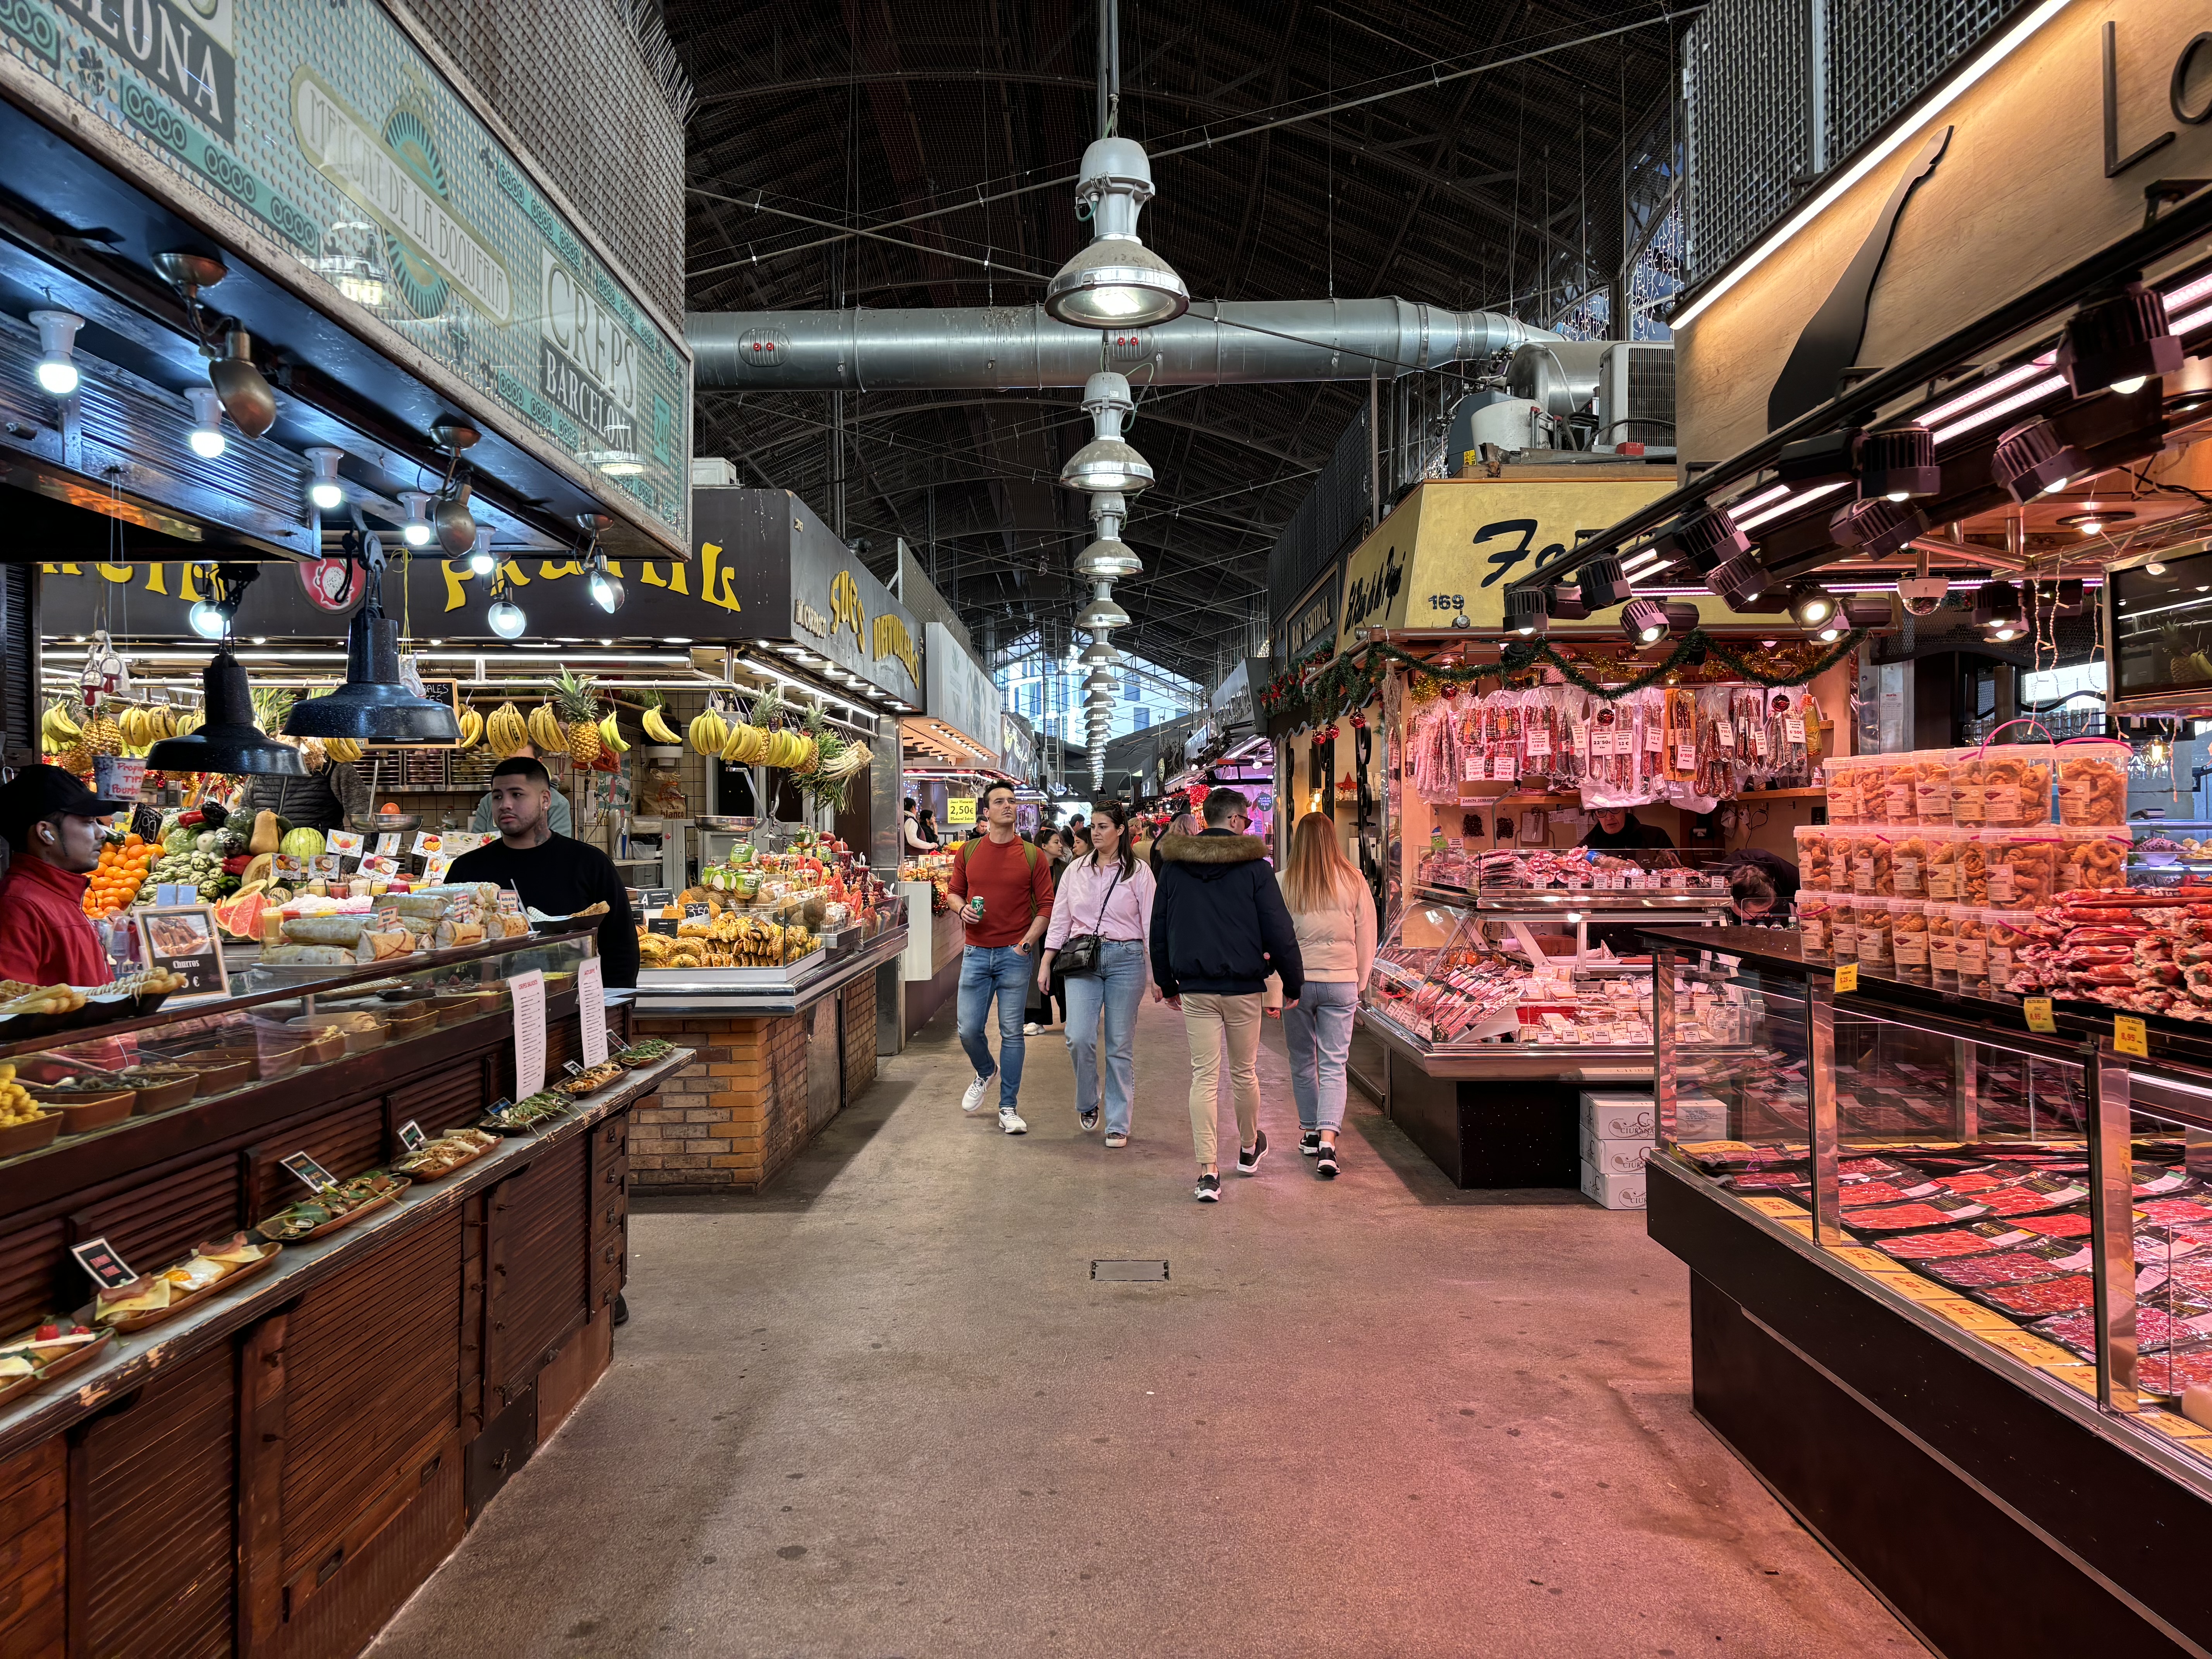 Inside the Mercado de la Boqueria.